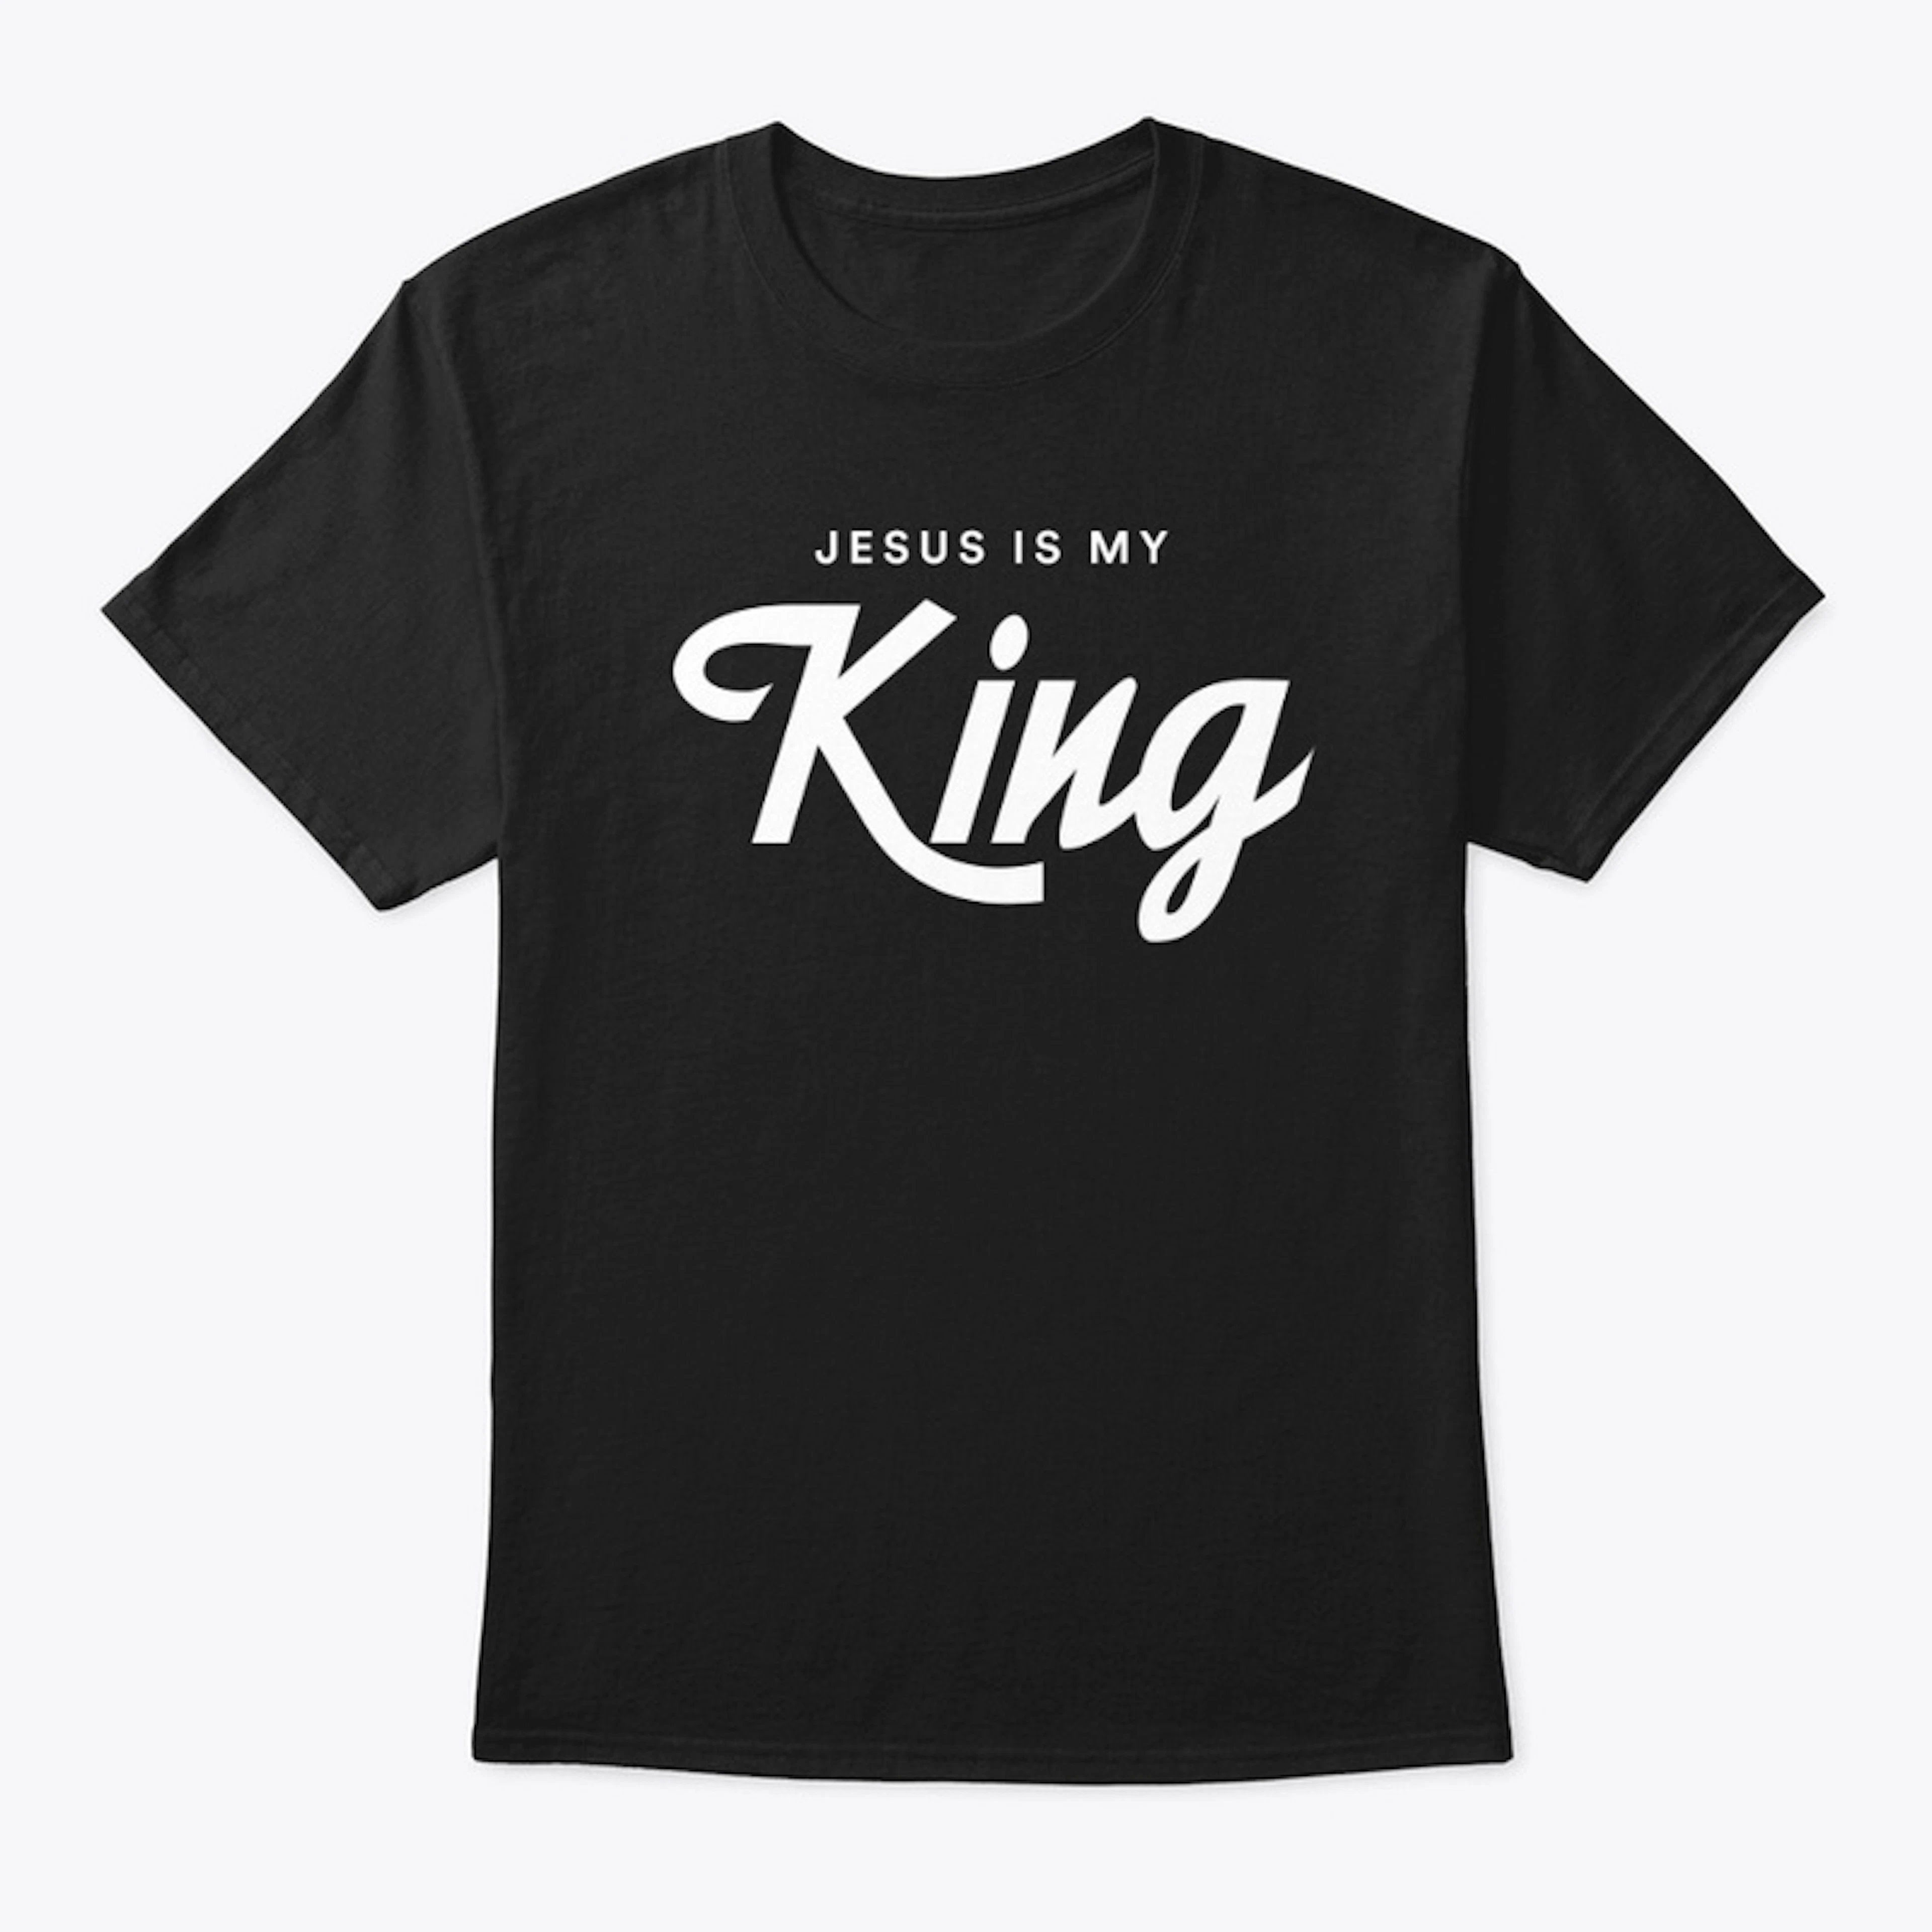 Jesus Is My King Tee | Black and more